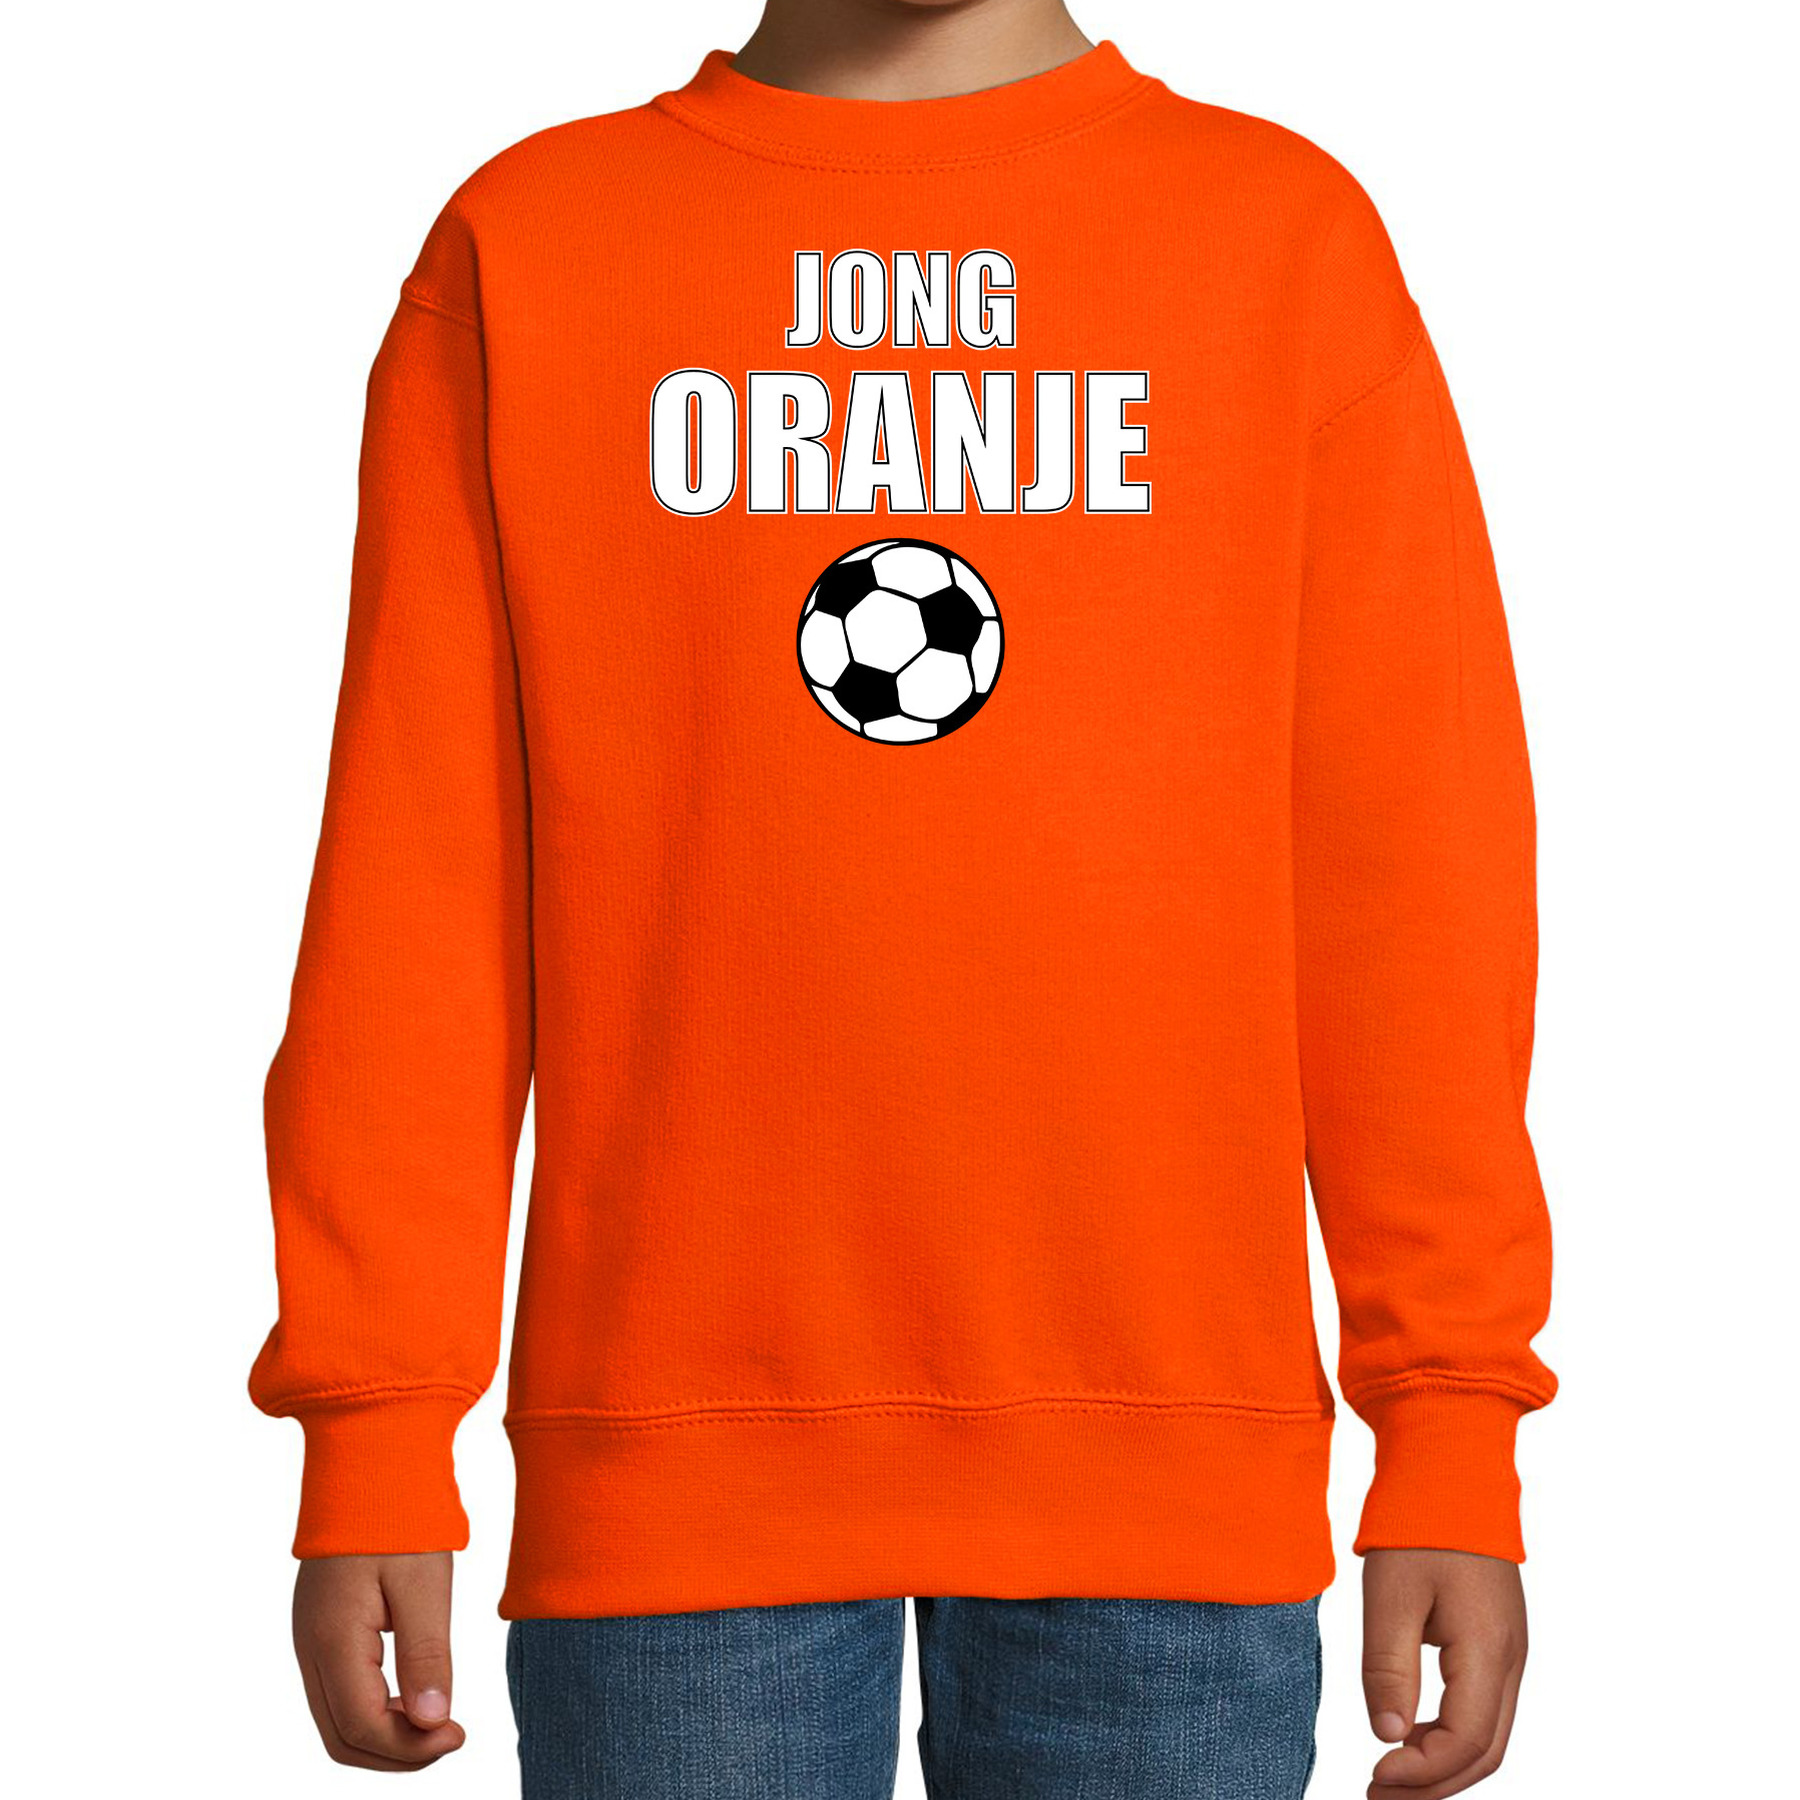 Jong oranje sweater-trui Holland-Nederland supporter EK- WK fan oranje voor kinderen